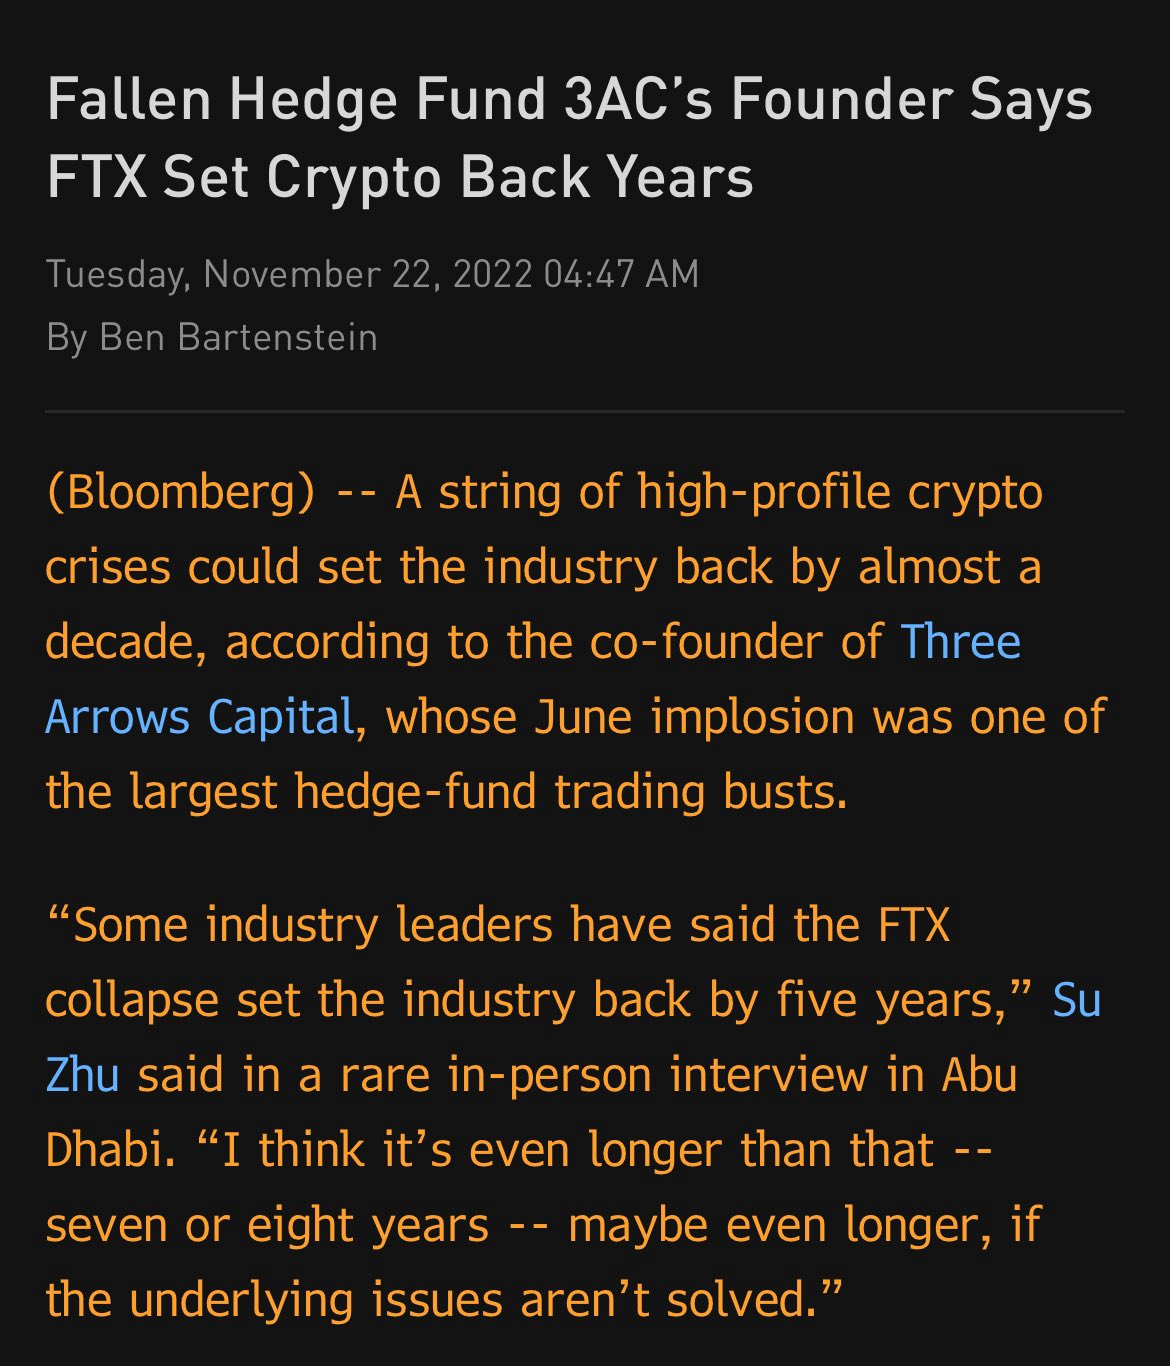 FTX Set Crypto Back Years